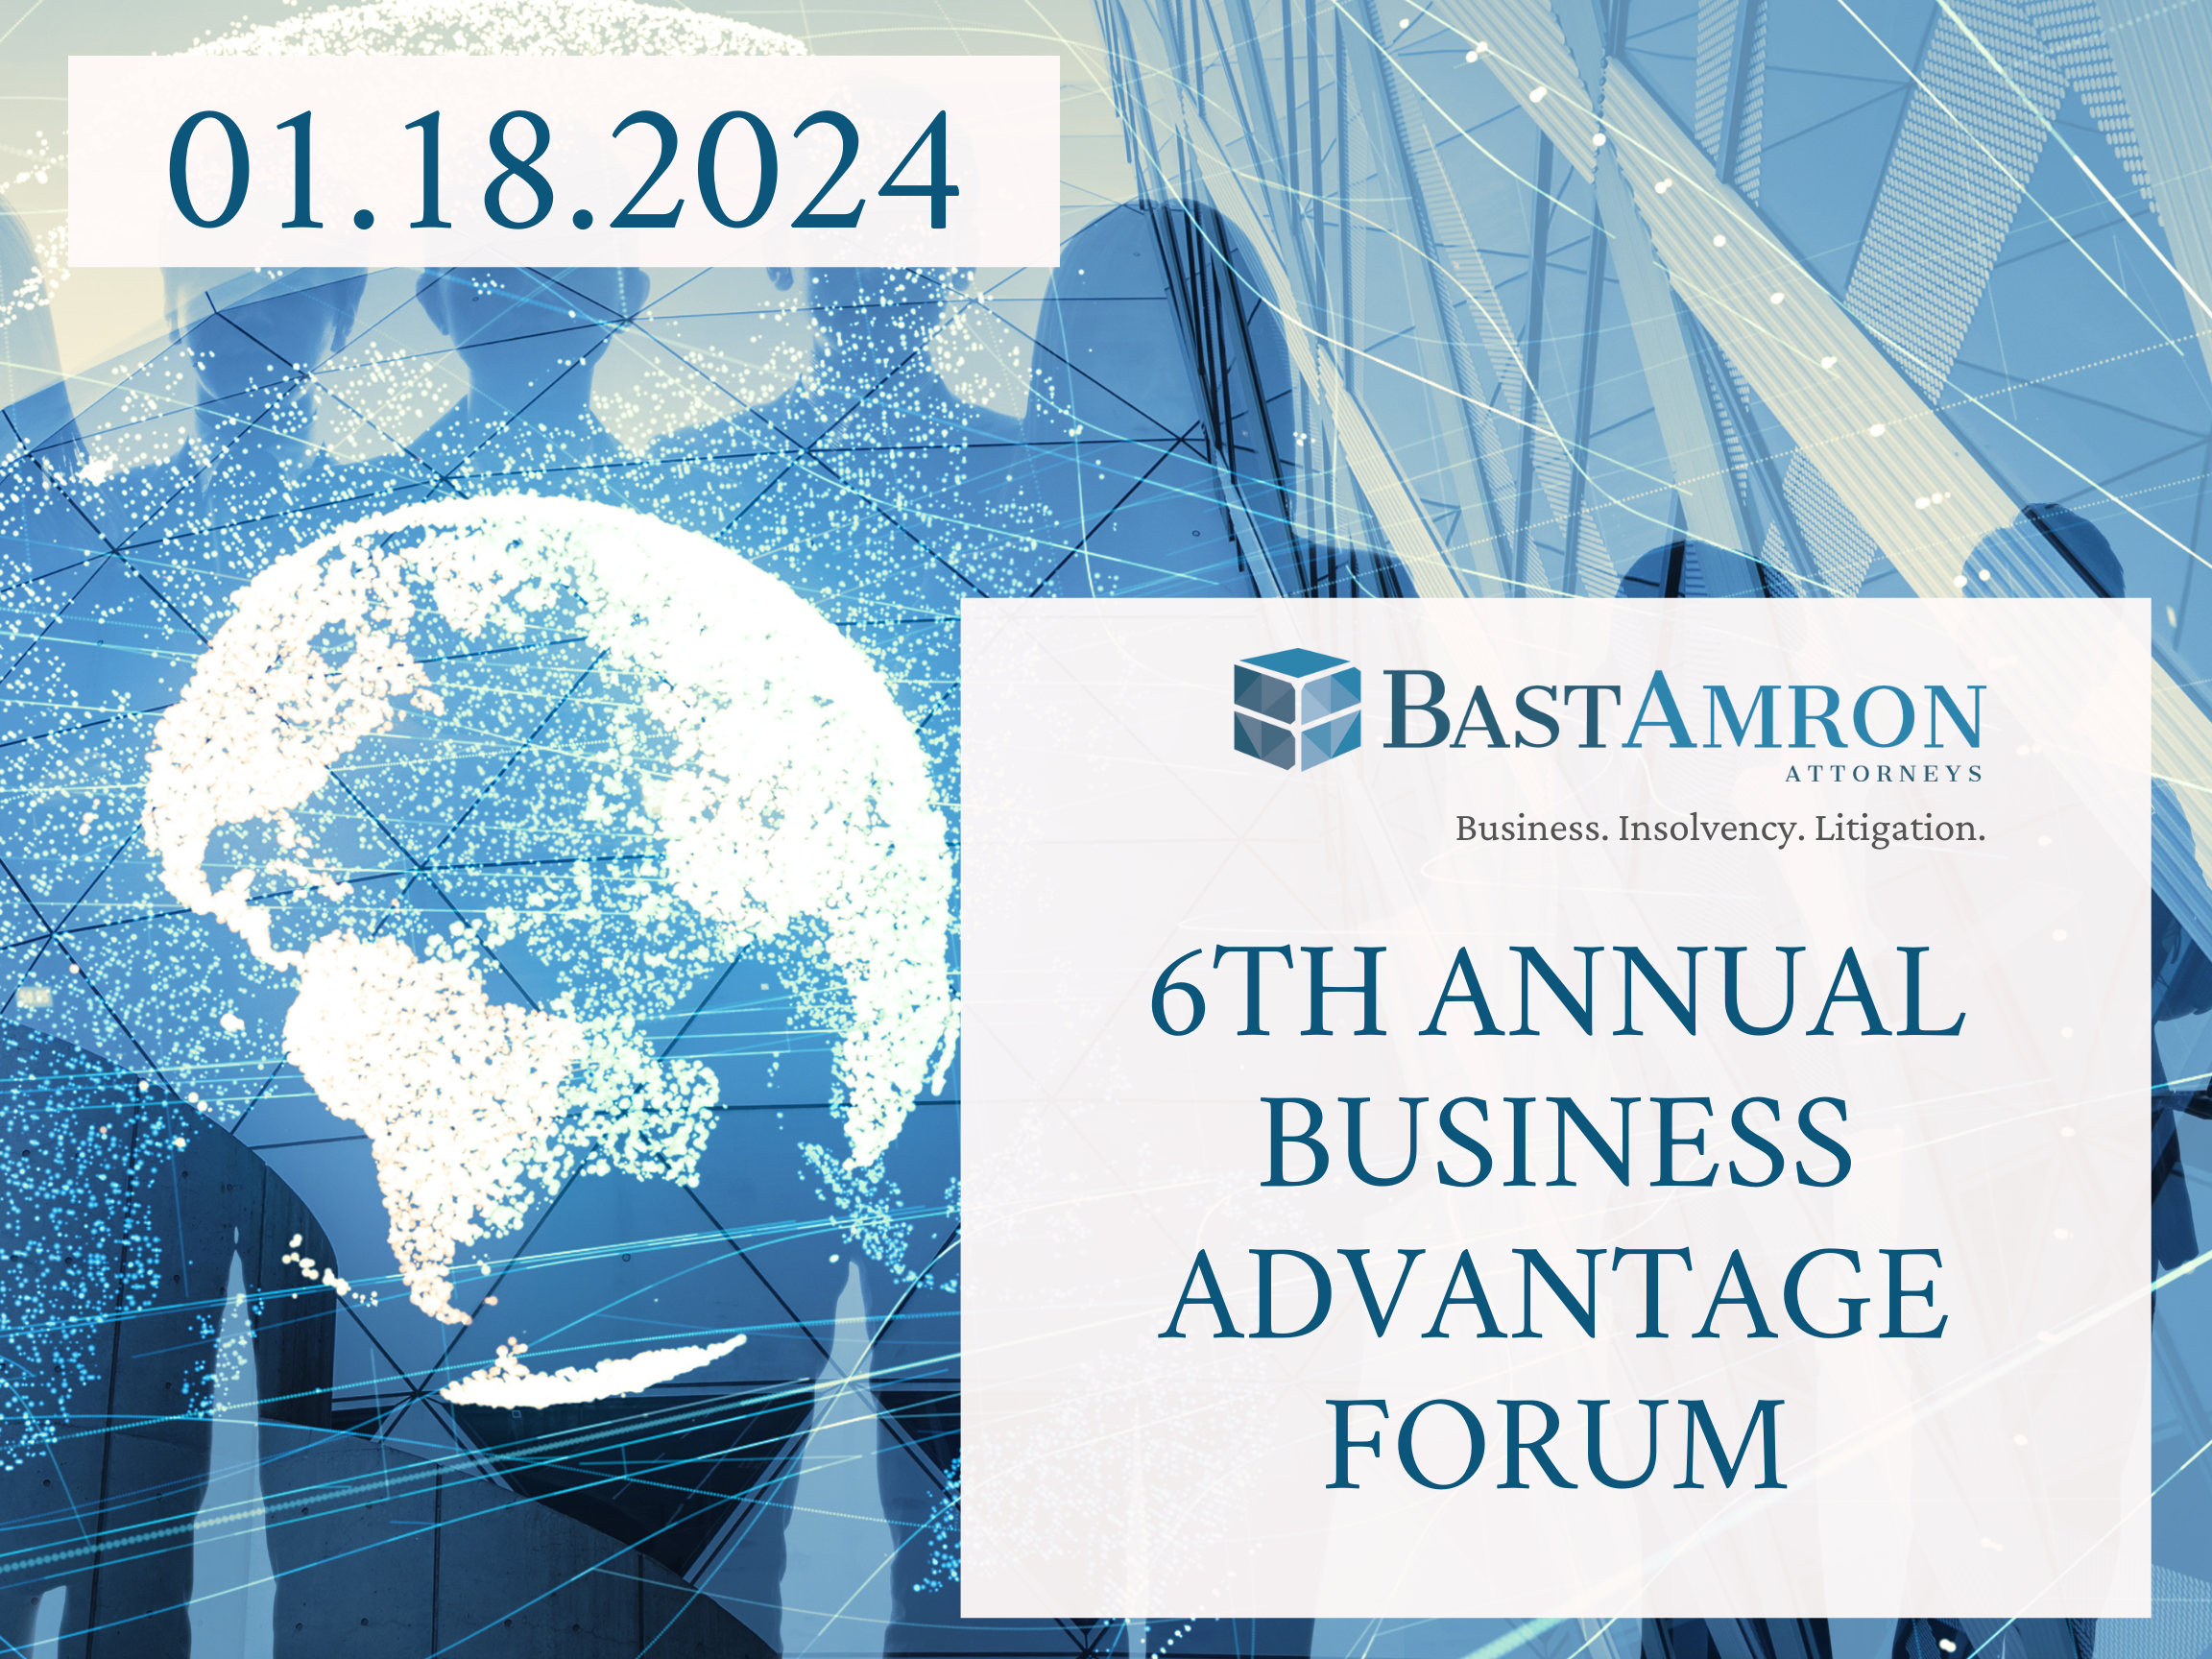 Bast Amron’s 6th Annual Business Advantage Forum! January 18, 2024